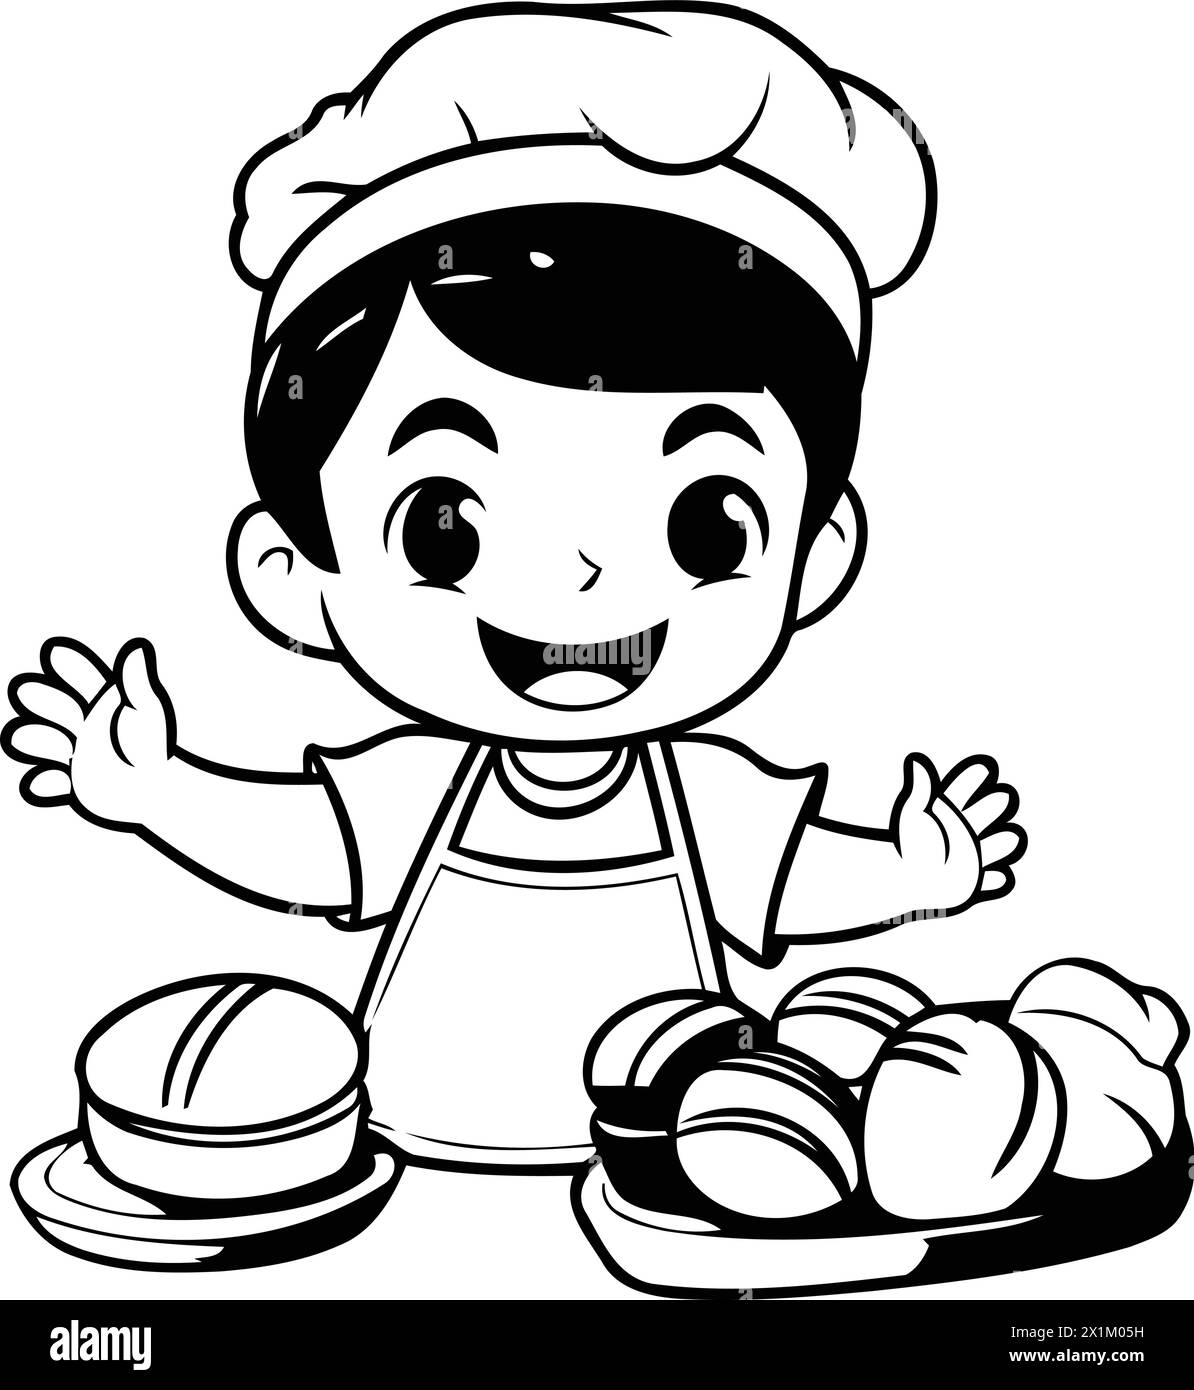 Cute boy chef holding bread and rolls. Vector cartoon illustration. Stock Vector